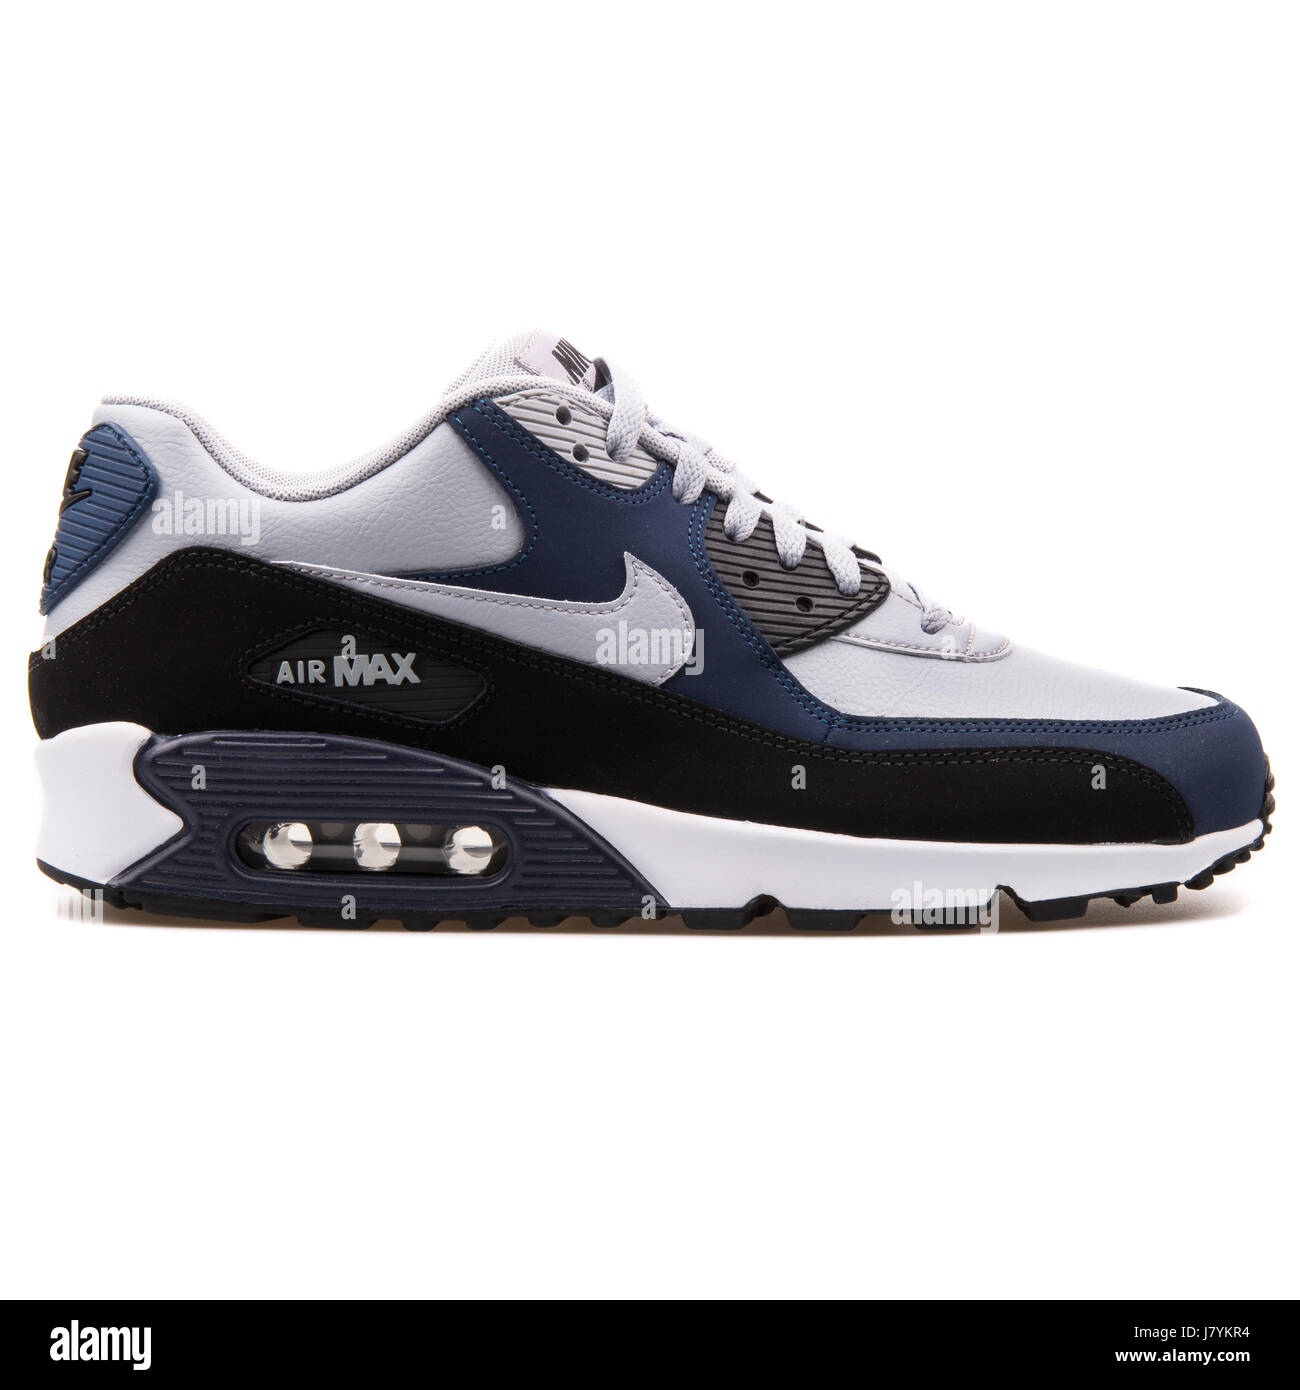 Nike Air Max 90 hommes bleu marine gris LTR Chaussures de sport -  652980-011 Photo Stock - Alamy